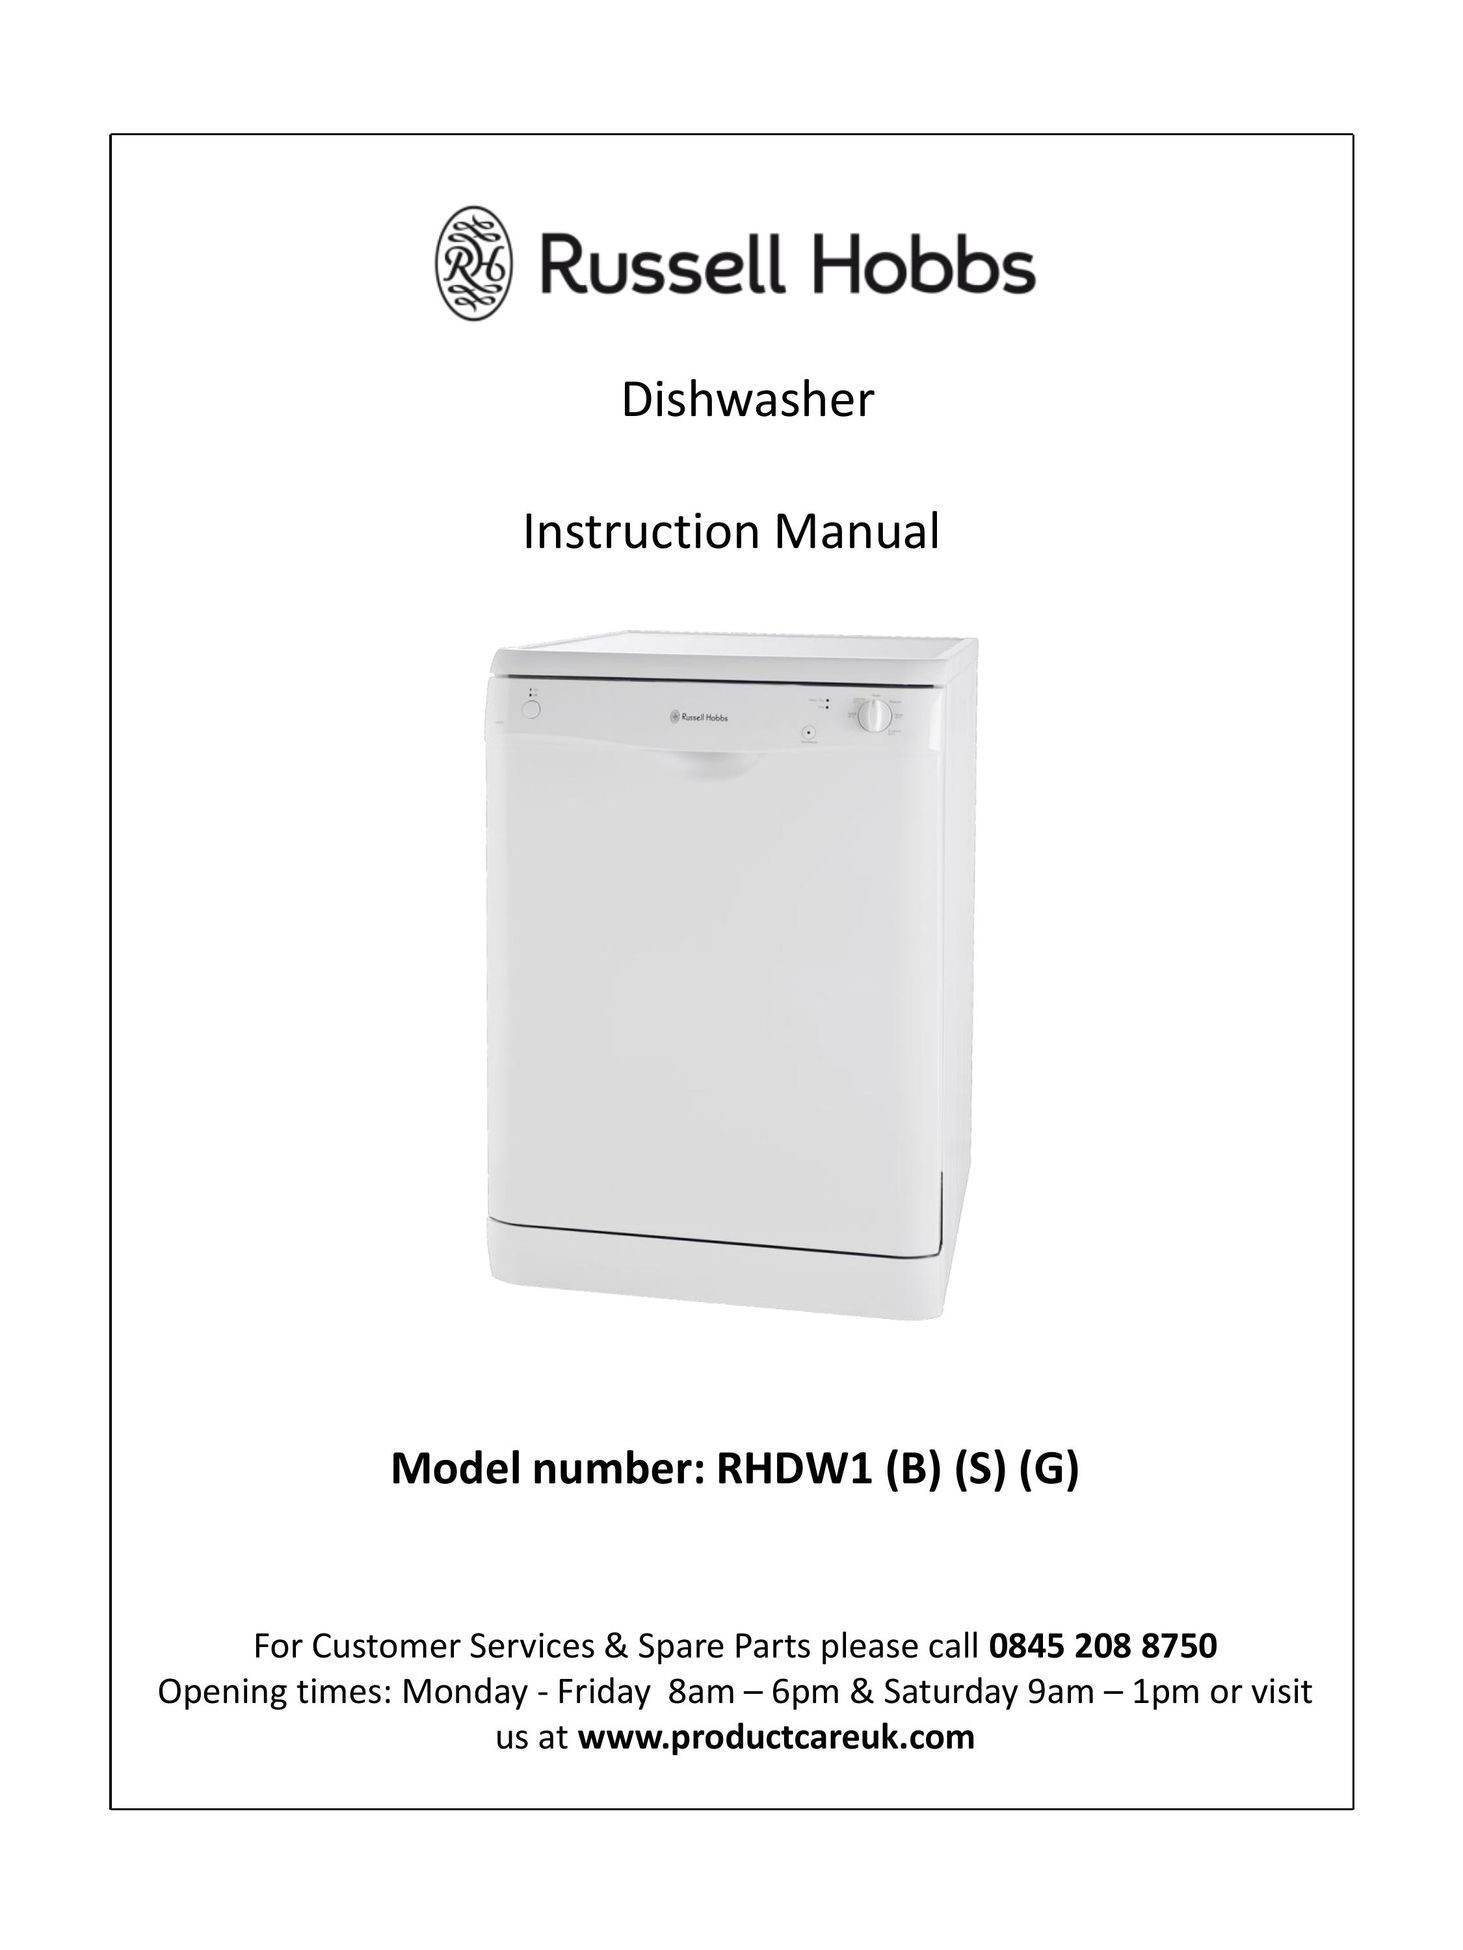 Russell Hobbs RHDW1 (B) (S) (G) Dishwasher User Manual